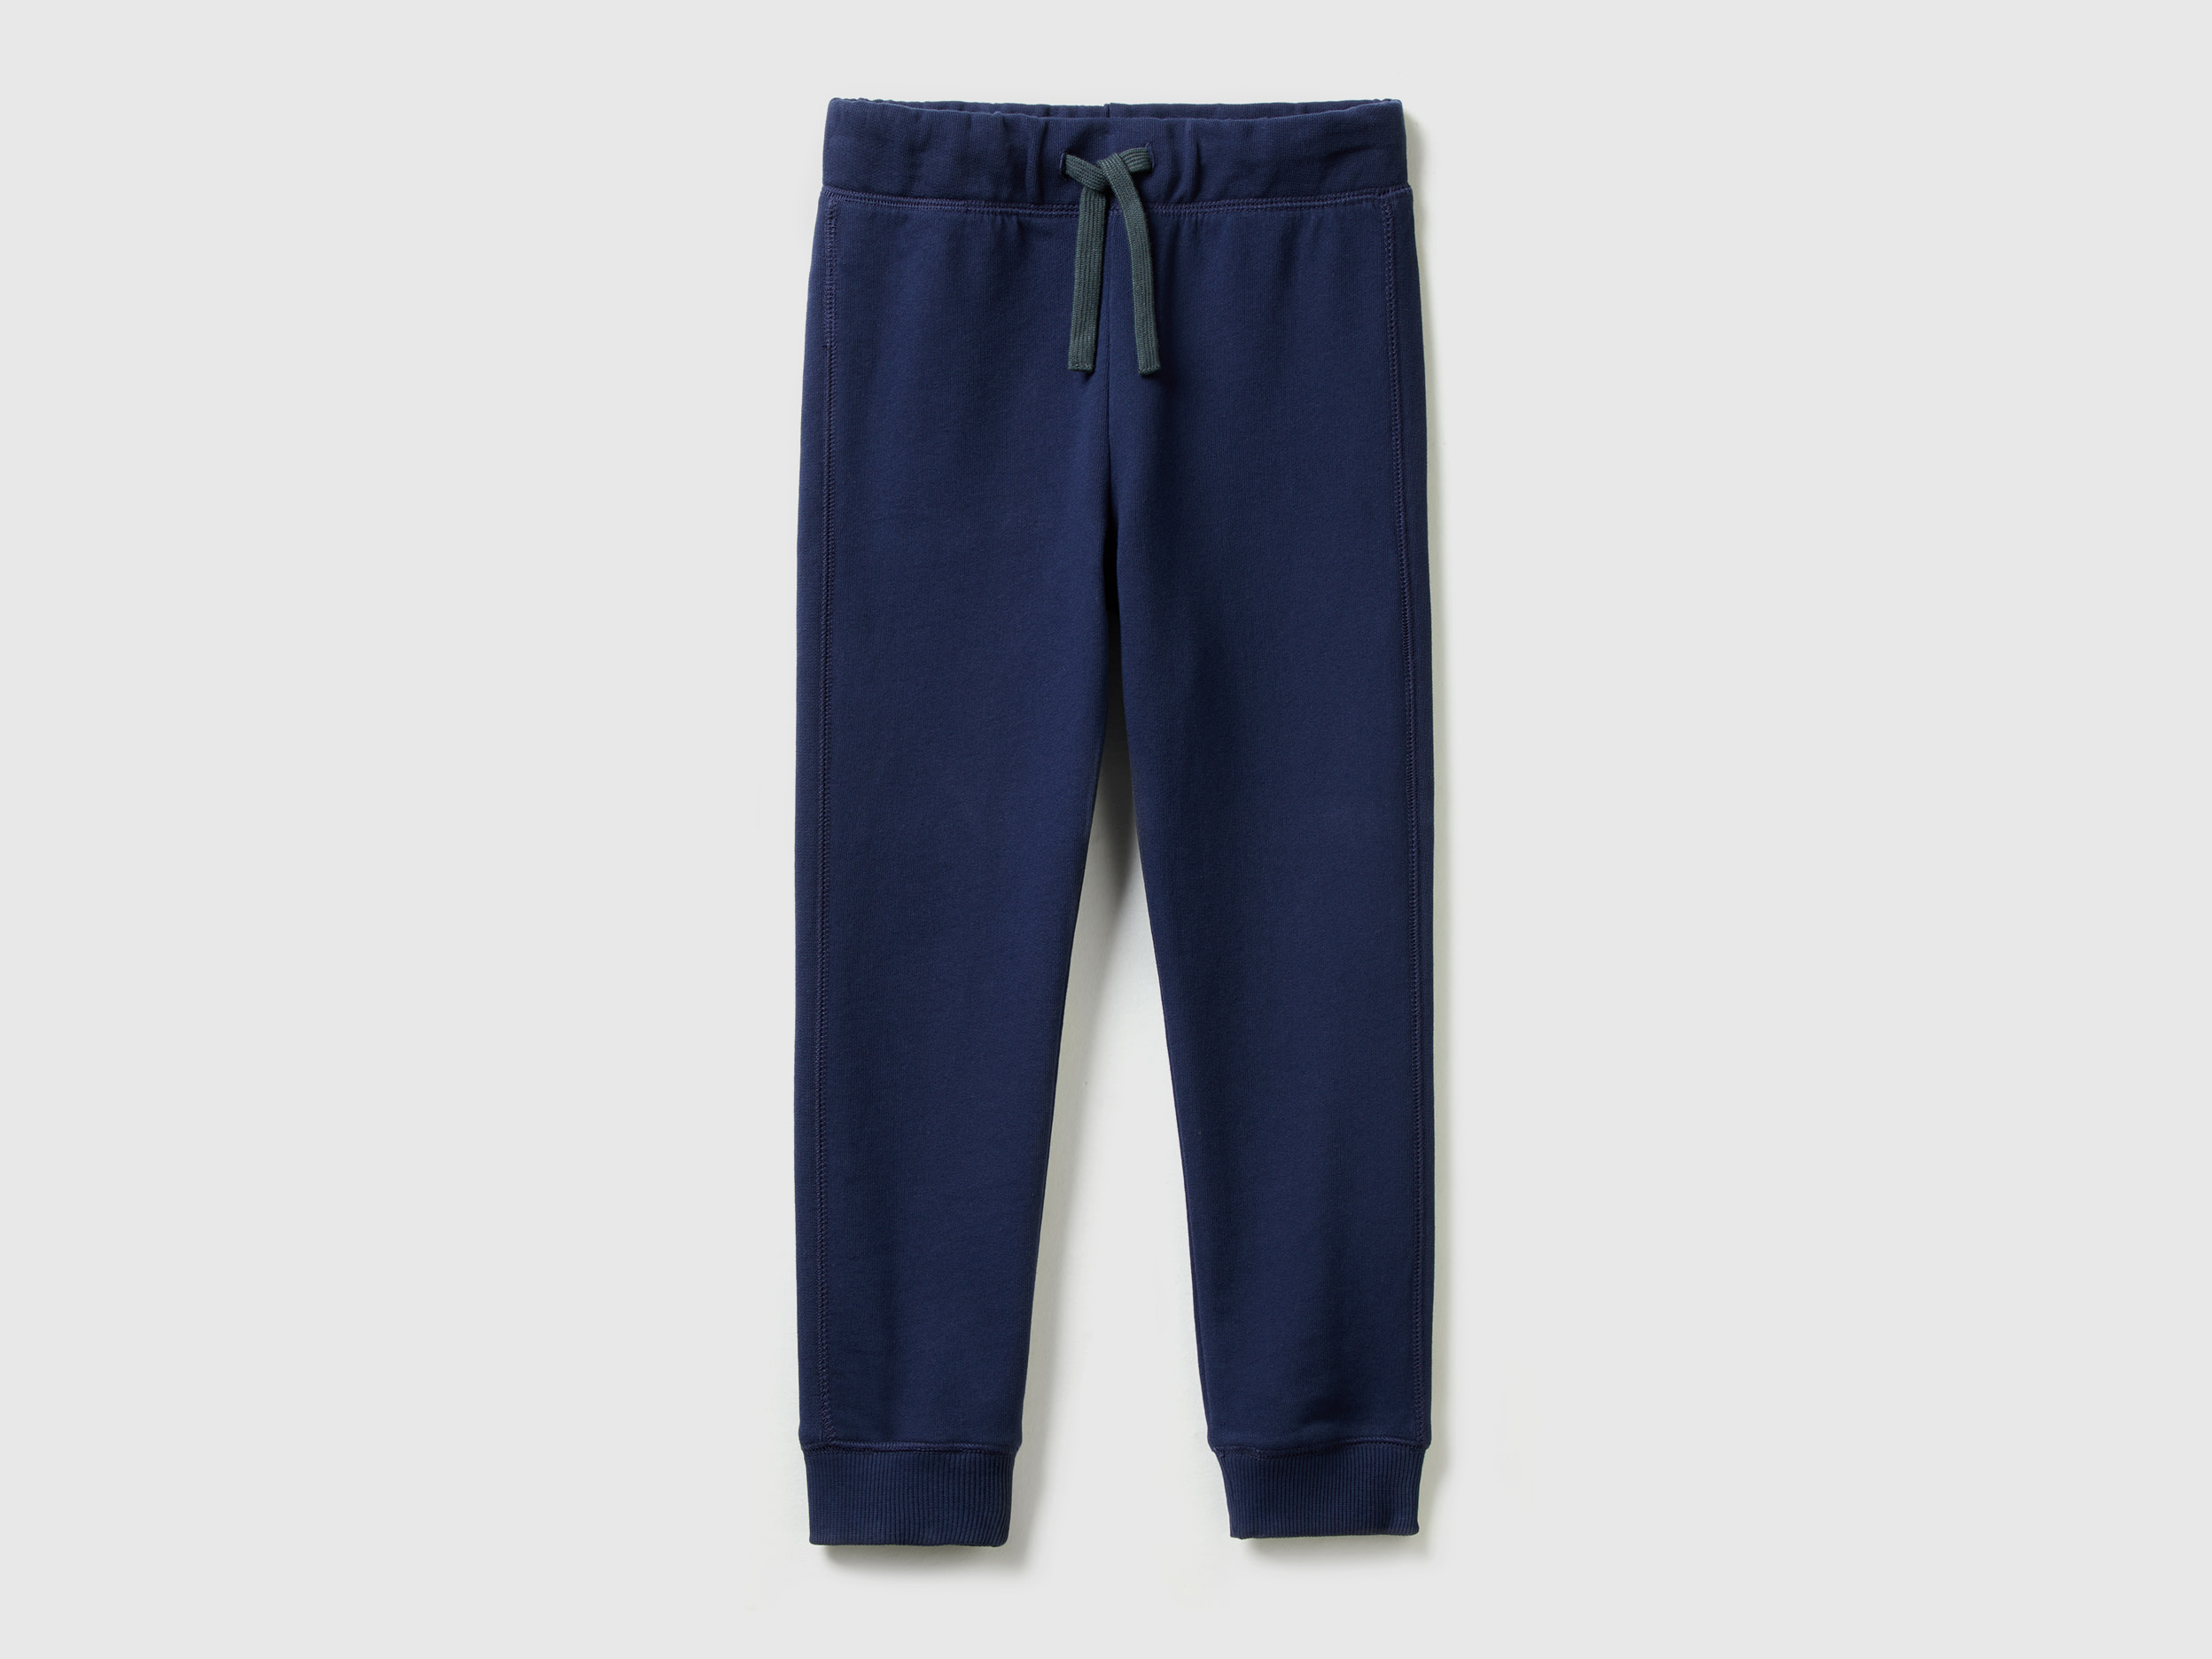 Benetton, 100% Cotton Sweatpants, size 3XL, Dark Blue, Kids